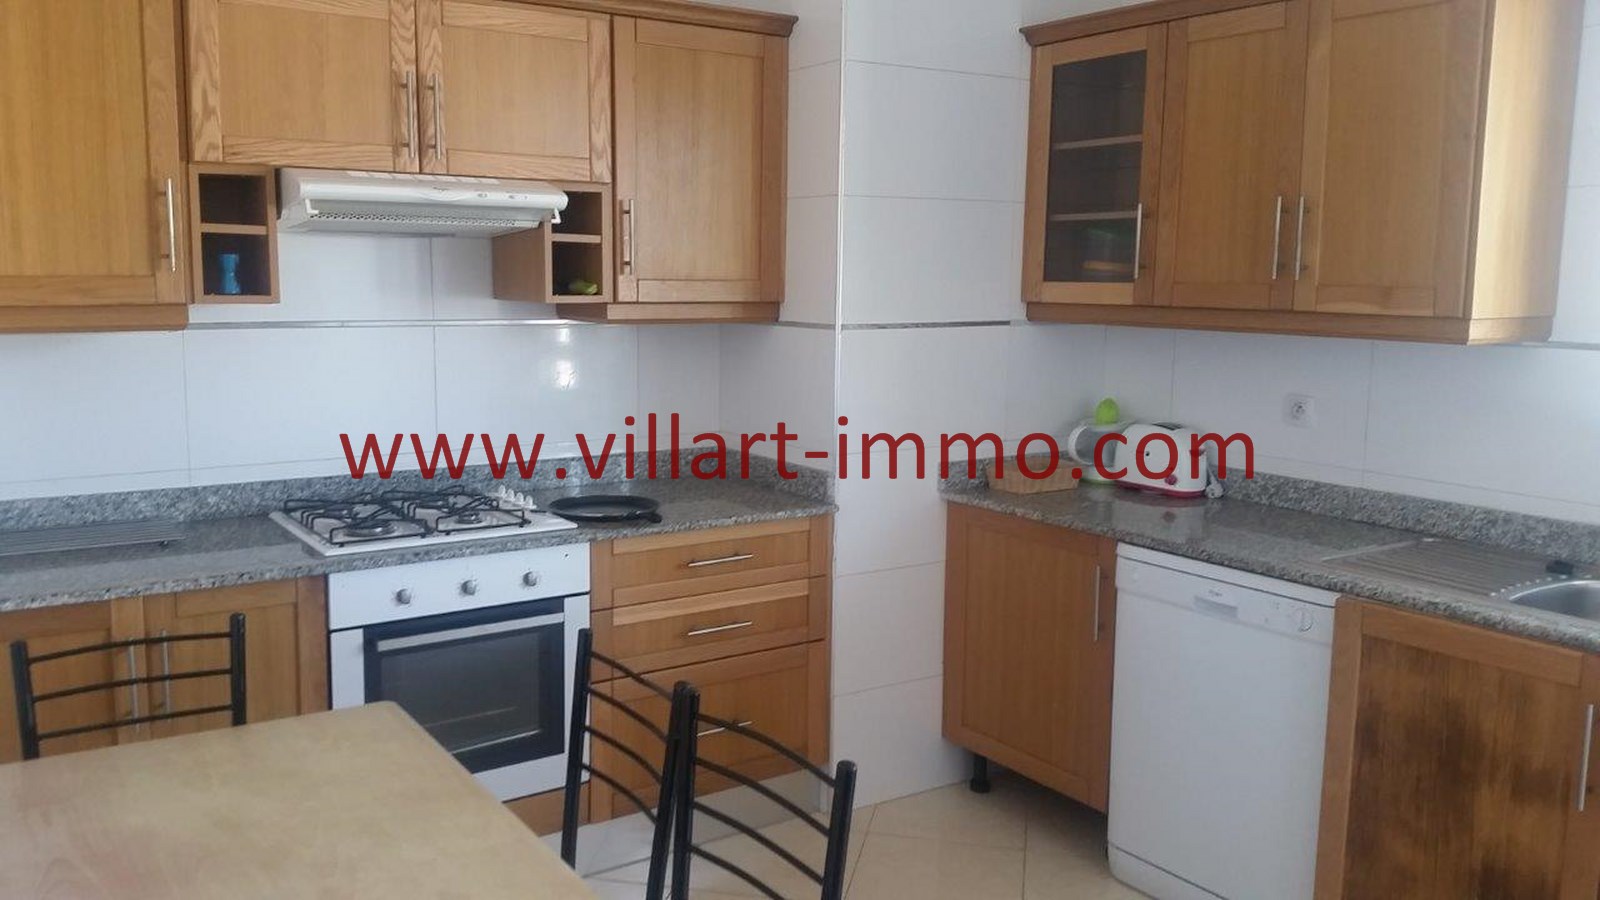 4-A vendre-Appartement-Tanger-Cuisine-VA613-Villart immo